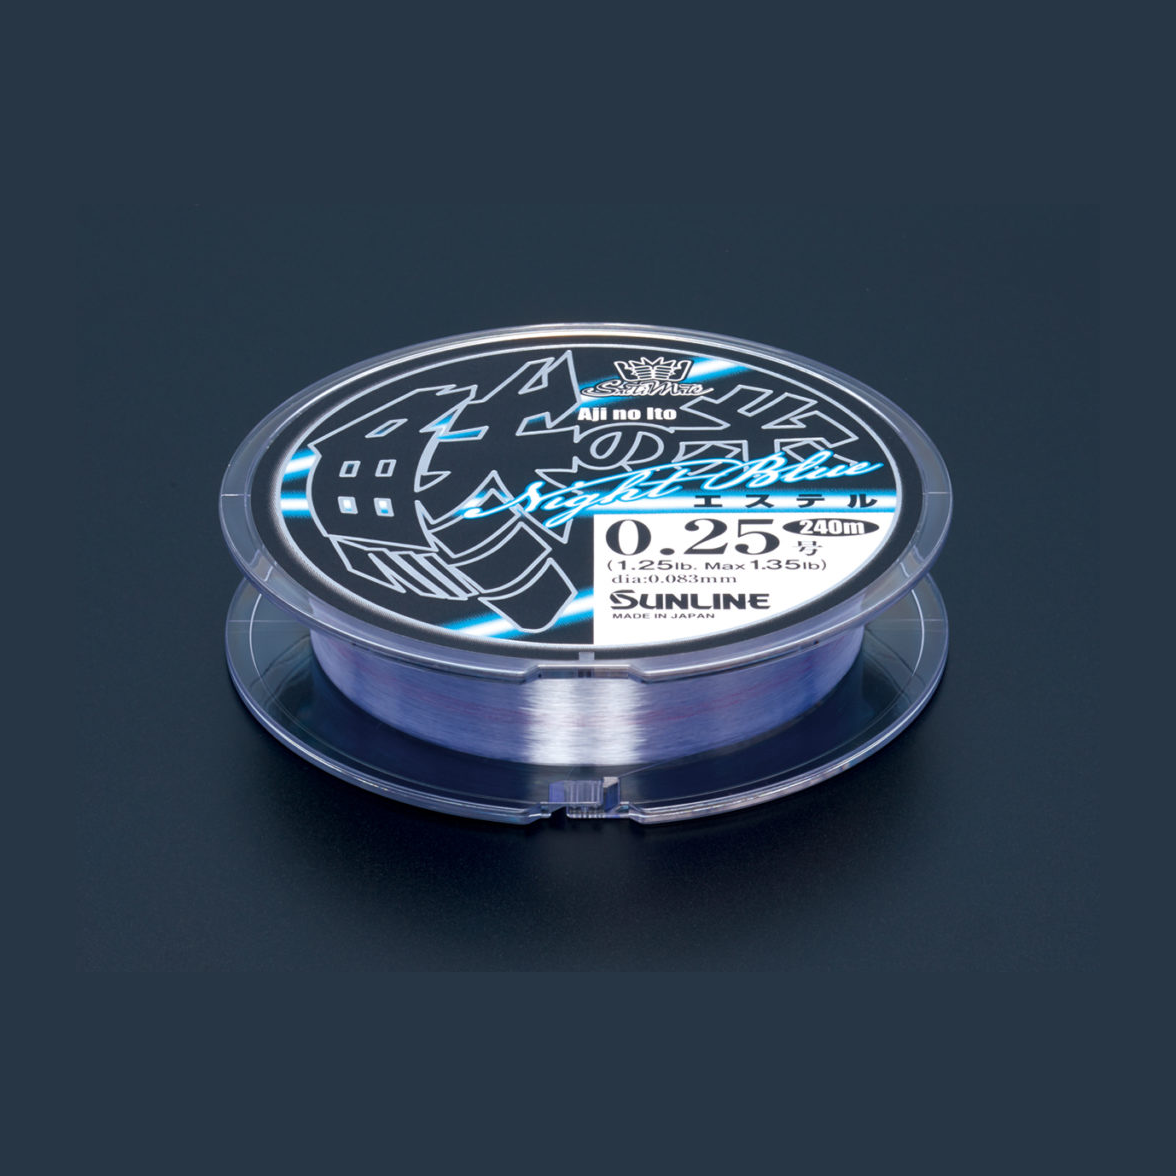 SUNLINE ソルティメイト 鯵の糸 エステル ナイトブルー 0.3号/1.5lb/ナイトブルー/240m